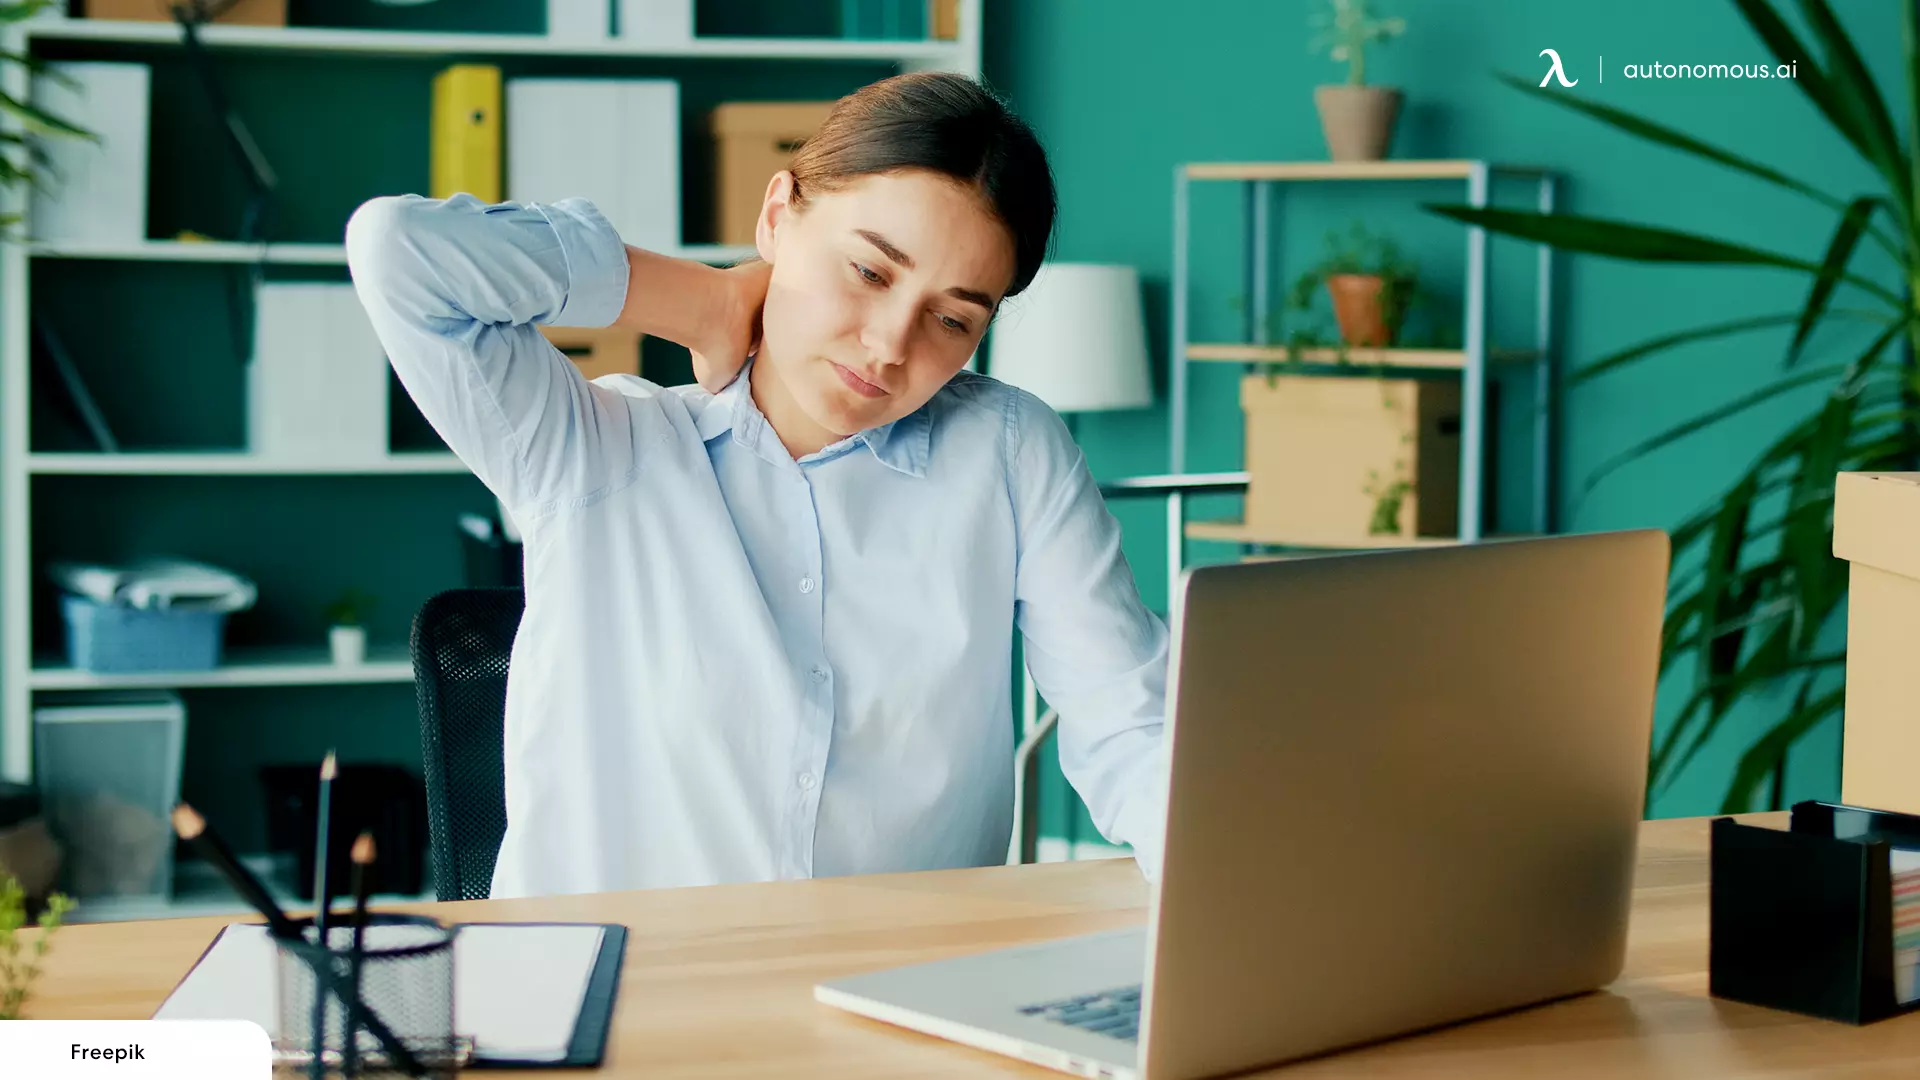 Symptoms of Workplace Fatigue